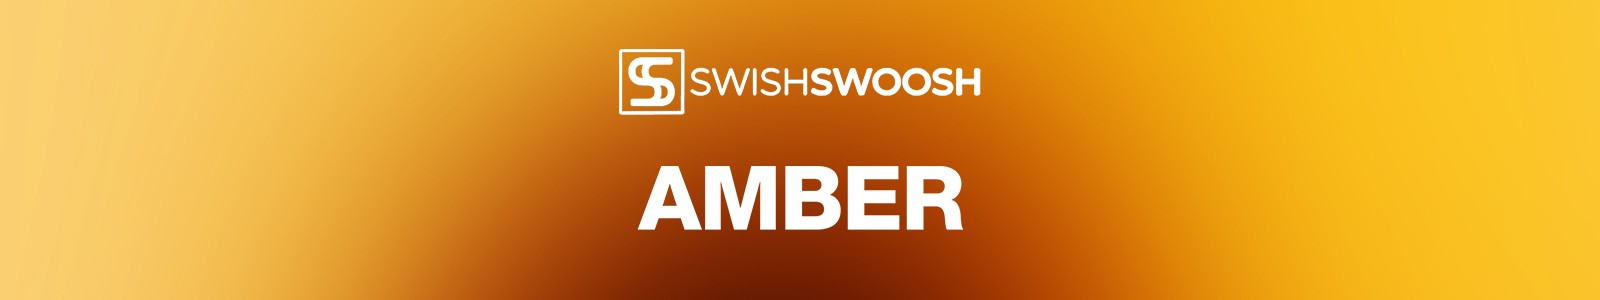 Amber for Kontakt Retail by SwishSwoosh